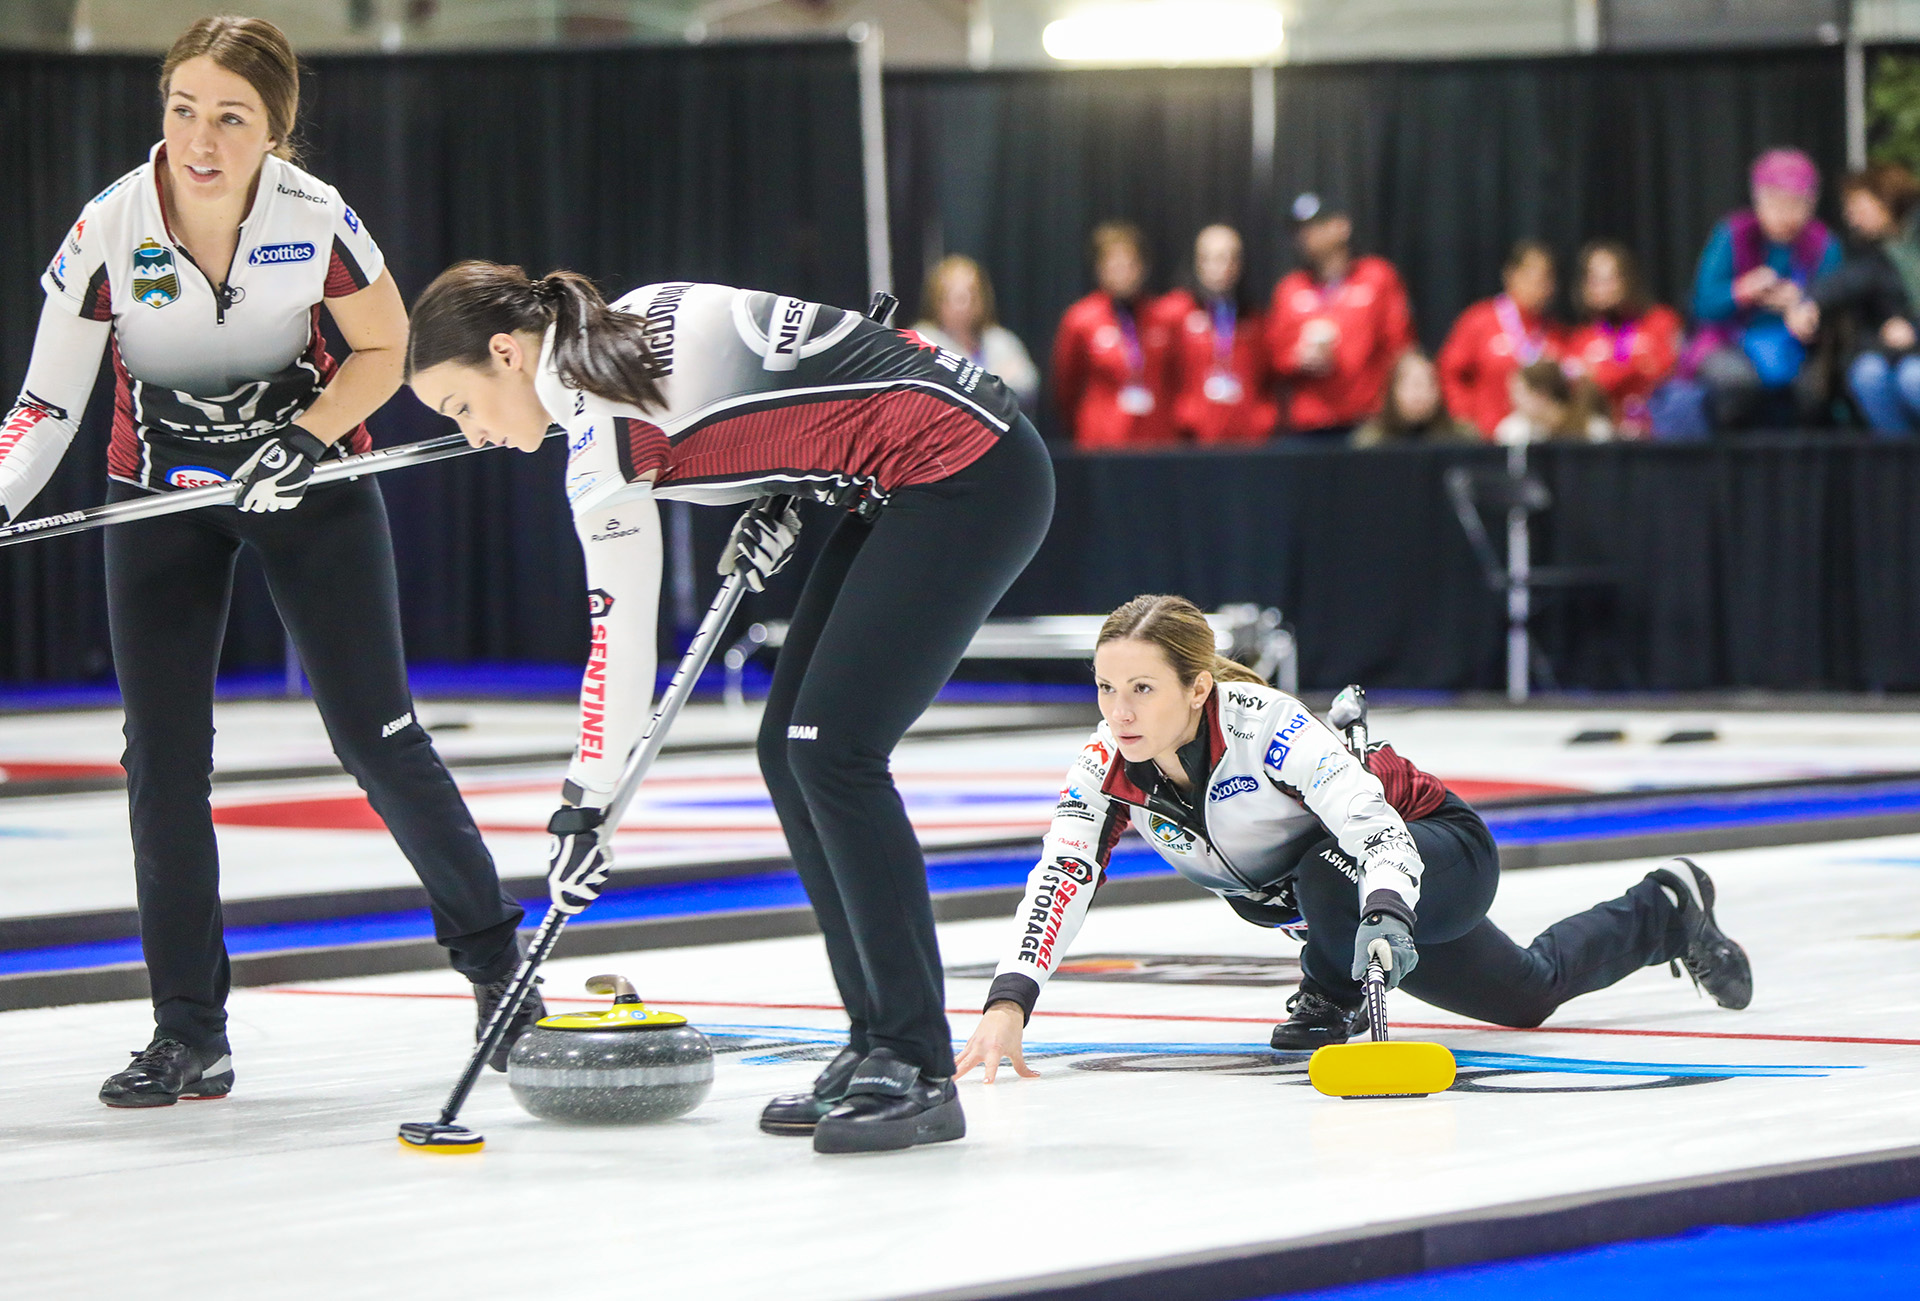 Provincial curling event deemed a success